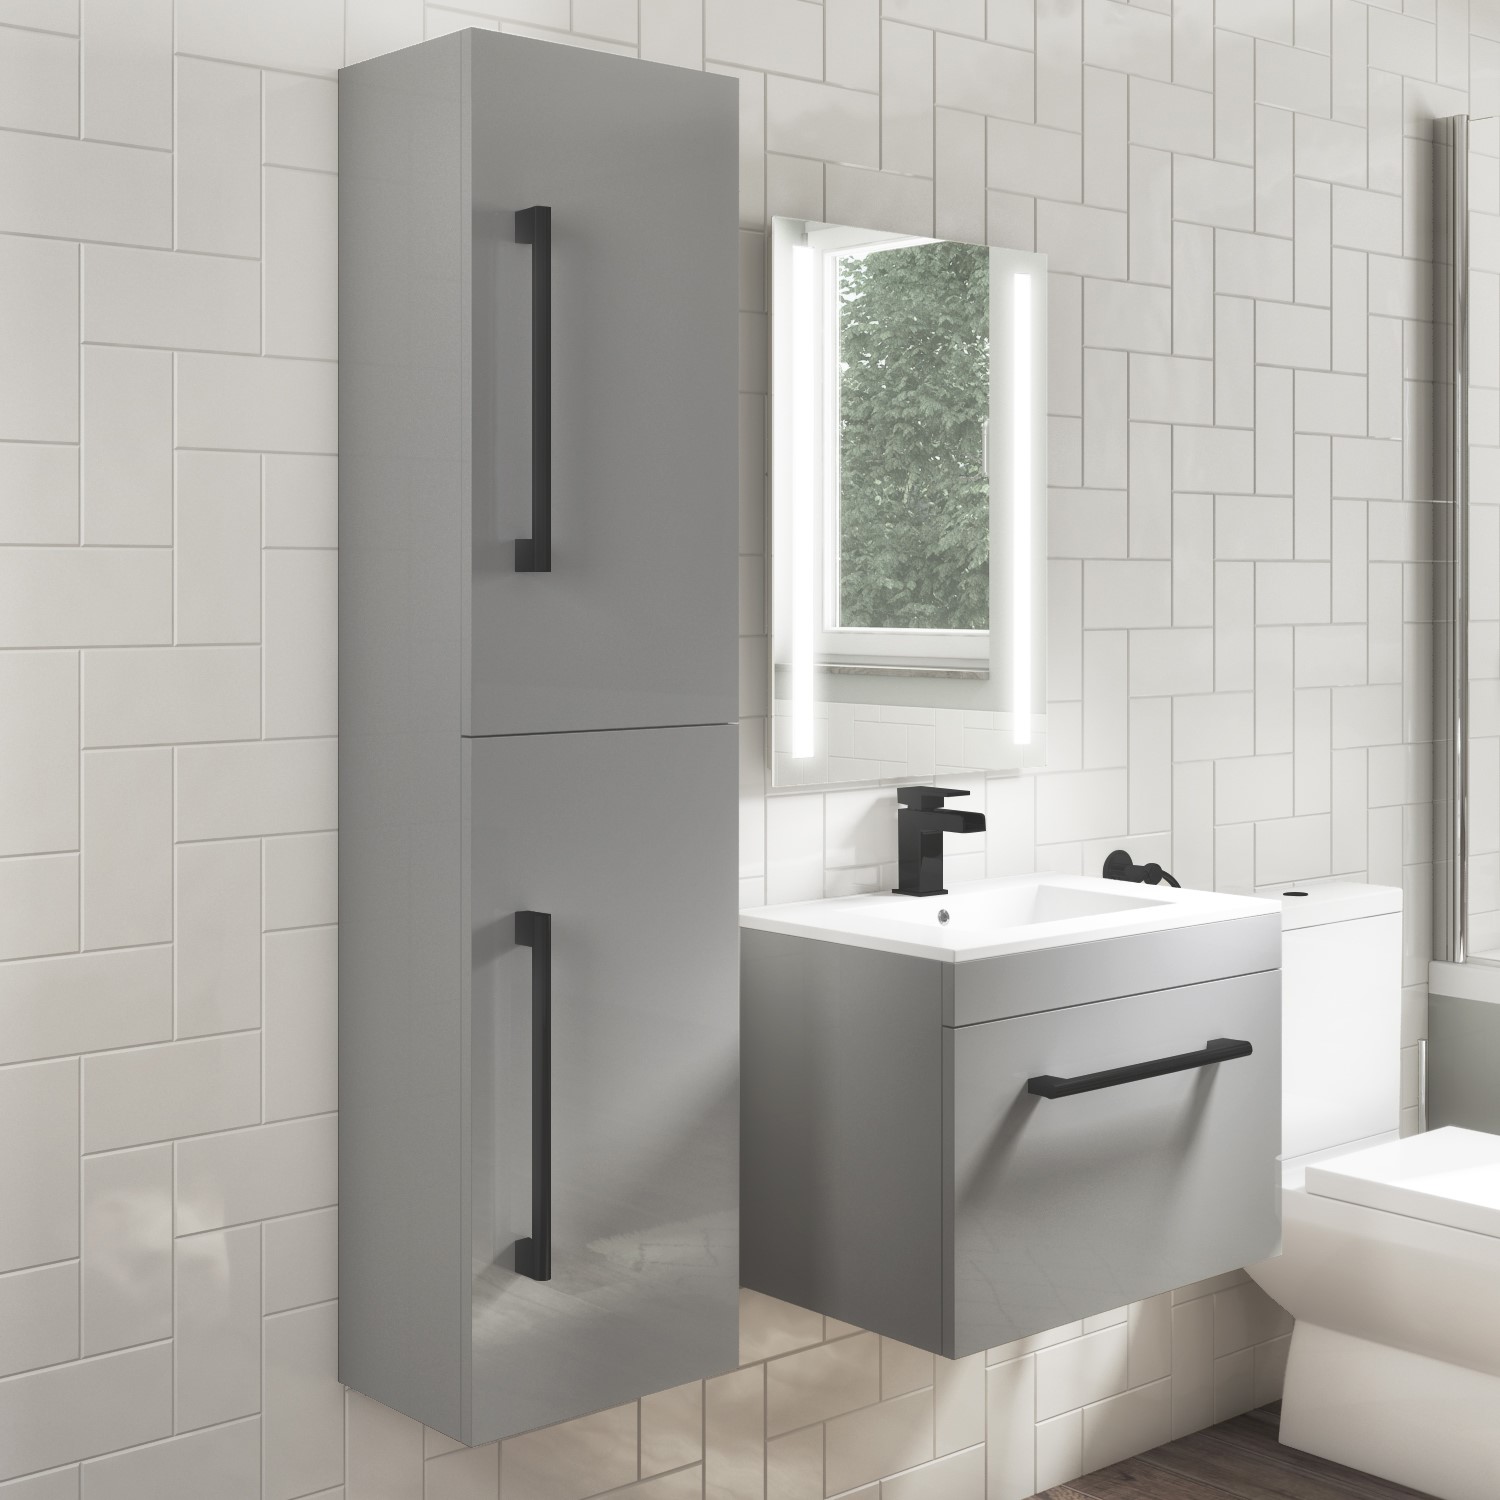 350mm Grey Wall Hung Tall Bathroom Cabinet with Chrome Handles - Ashford